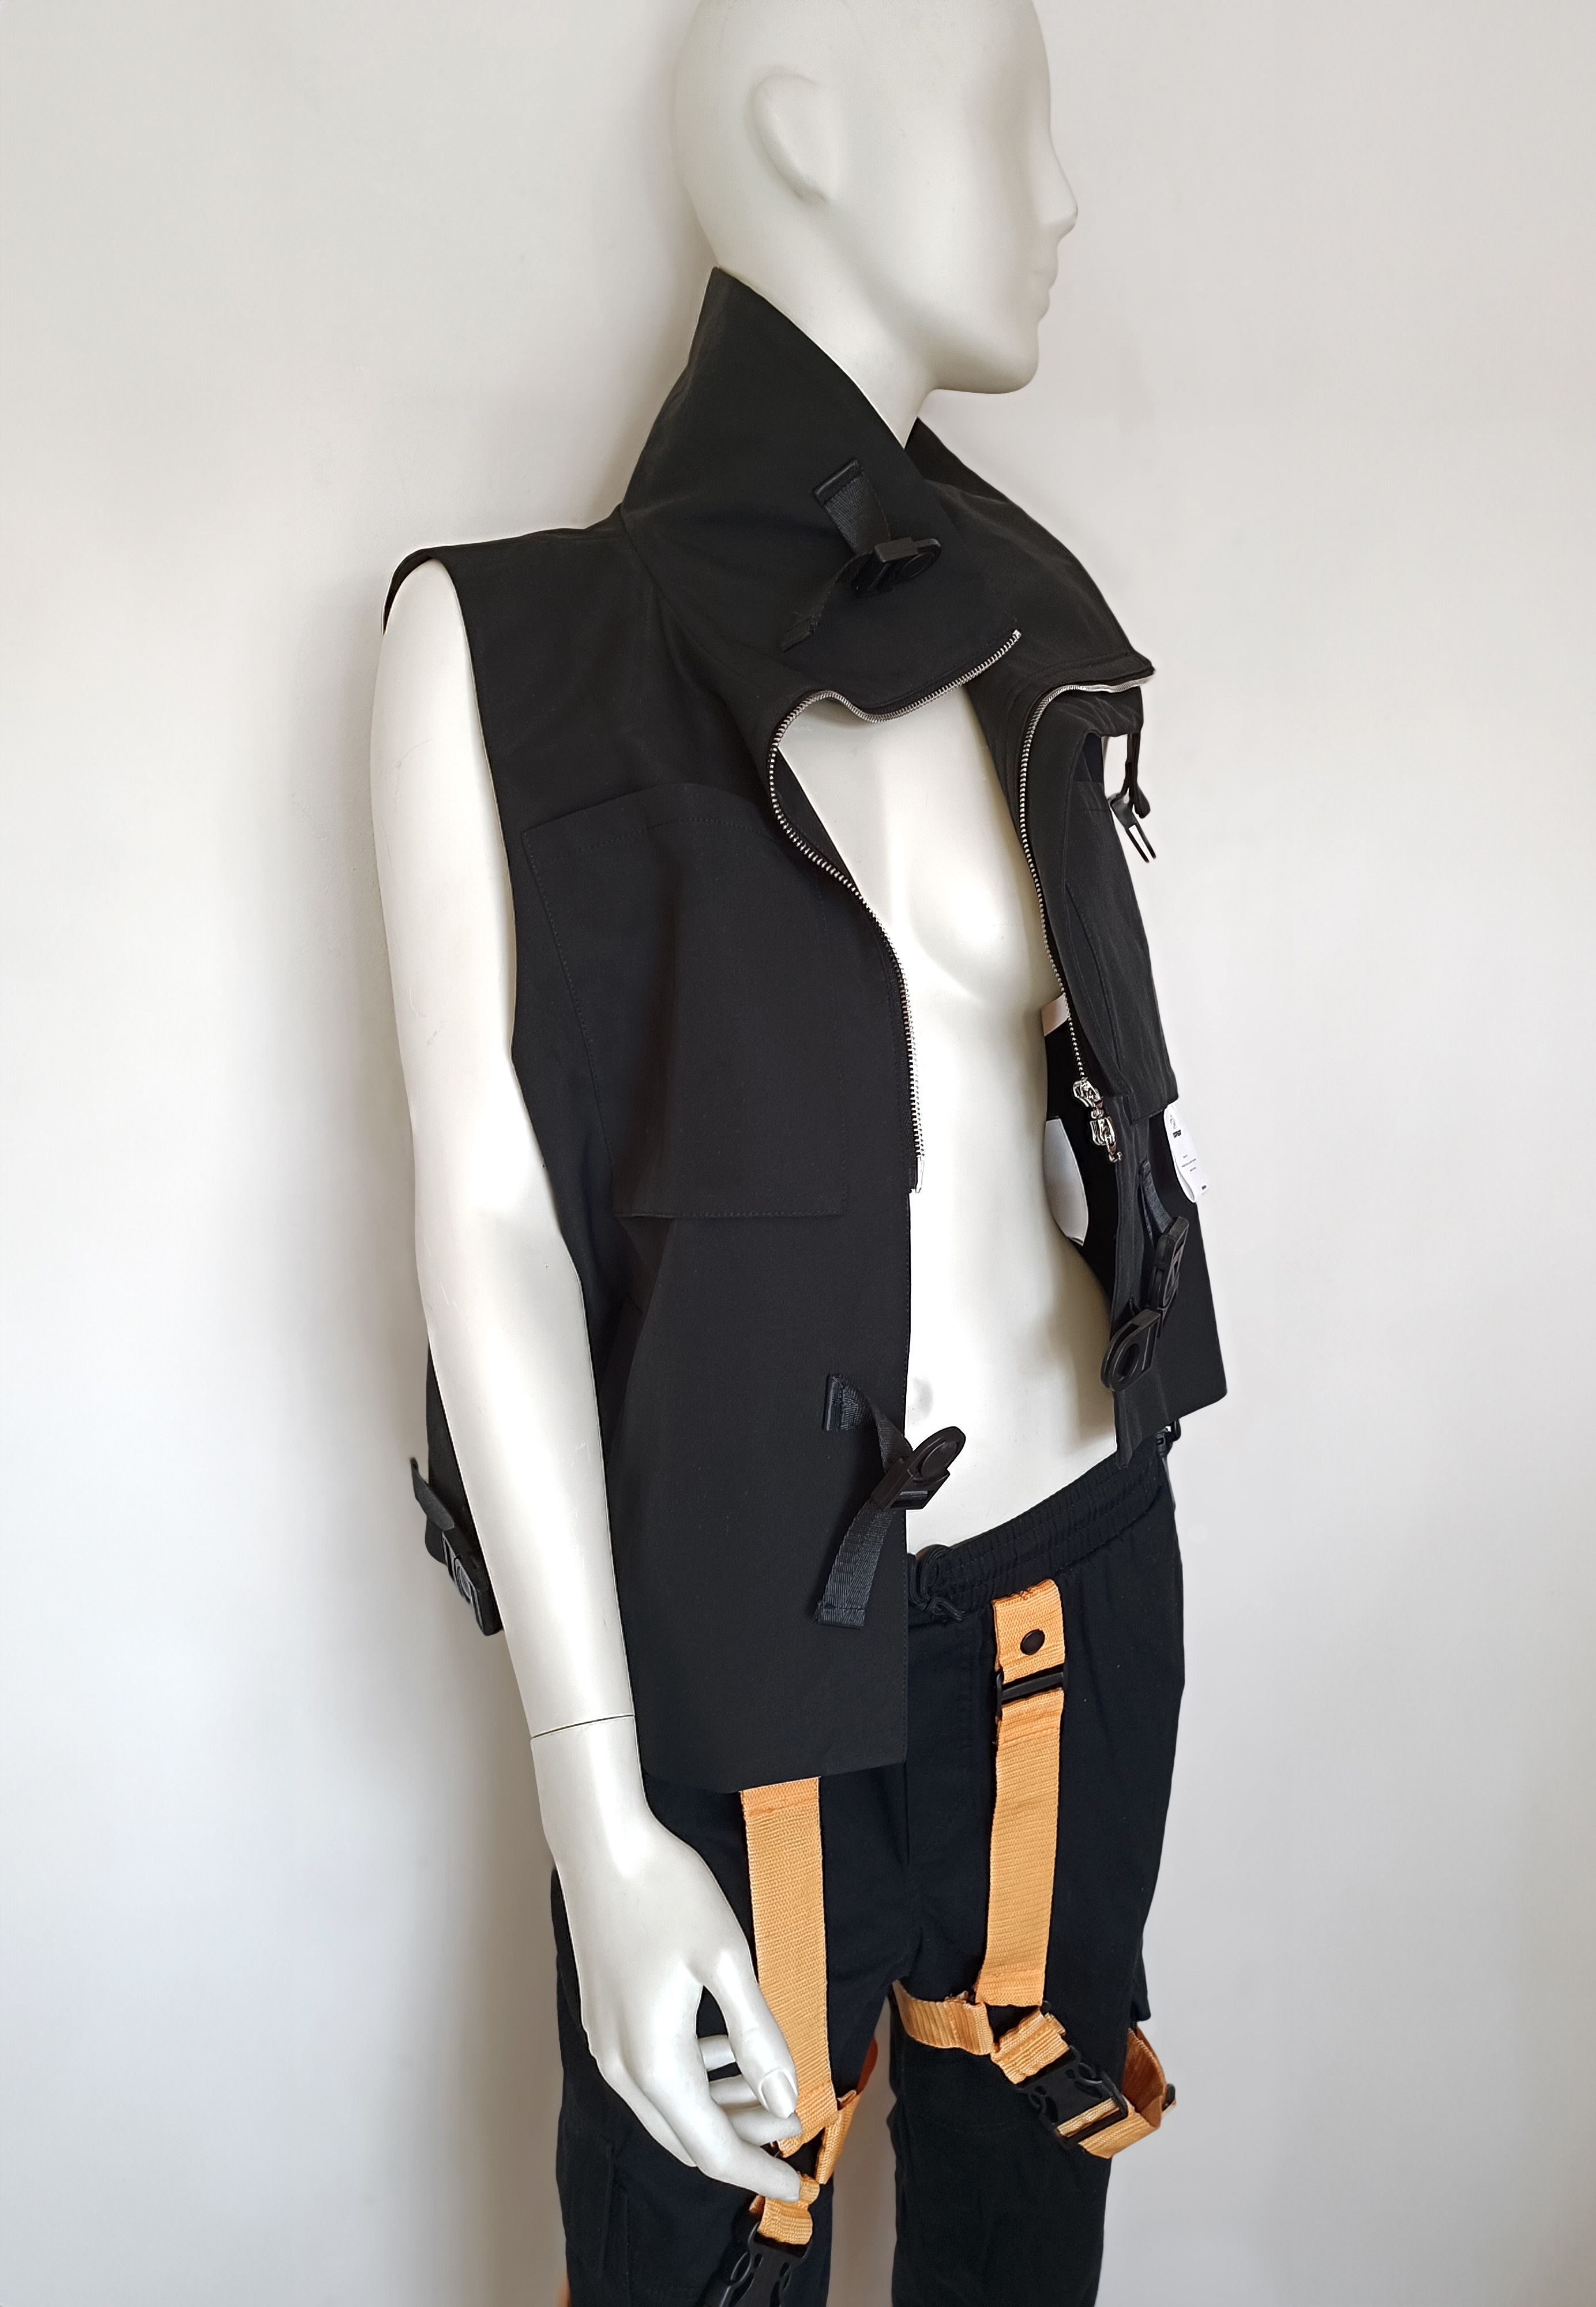 Avant Garde - Avant-Garde Adjustable Tactical Vest by ONSPEED - 7